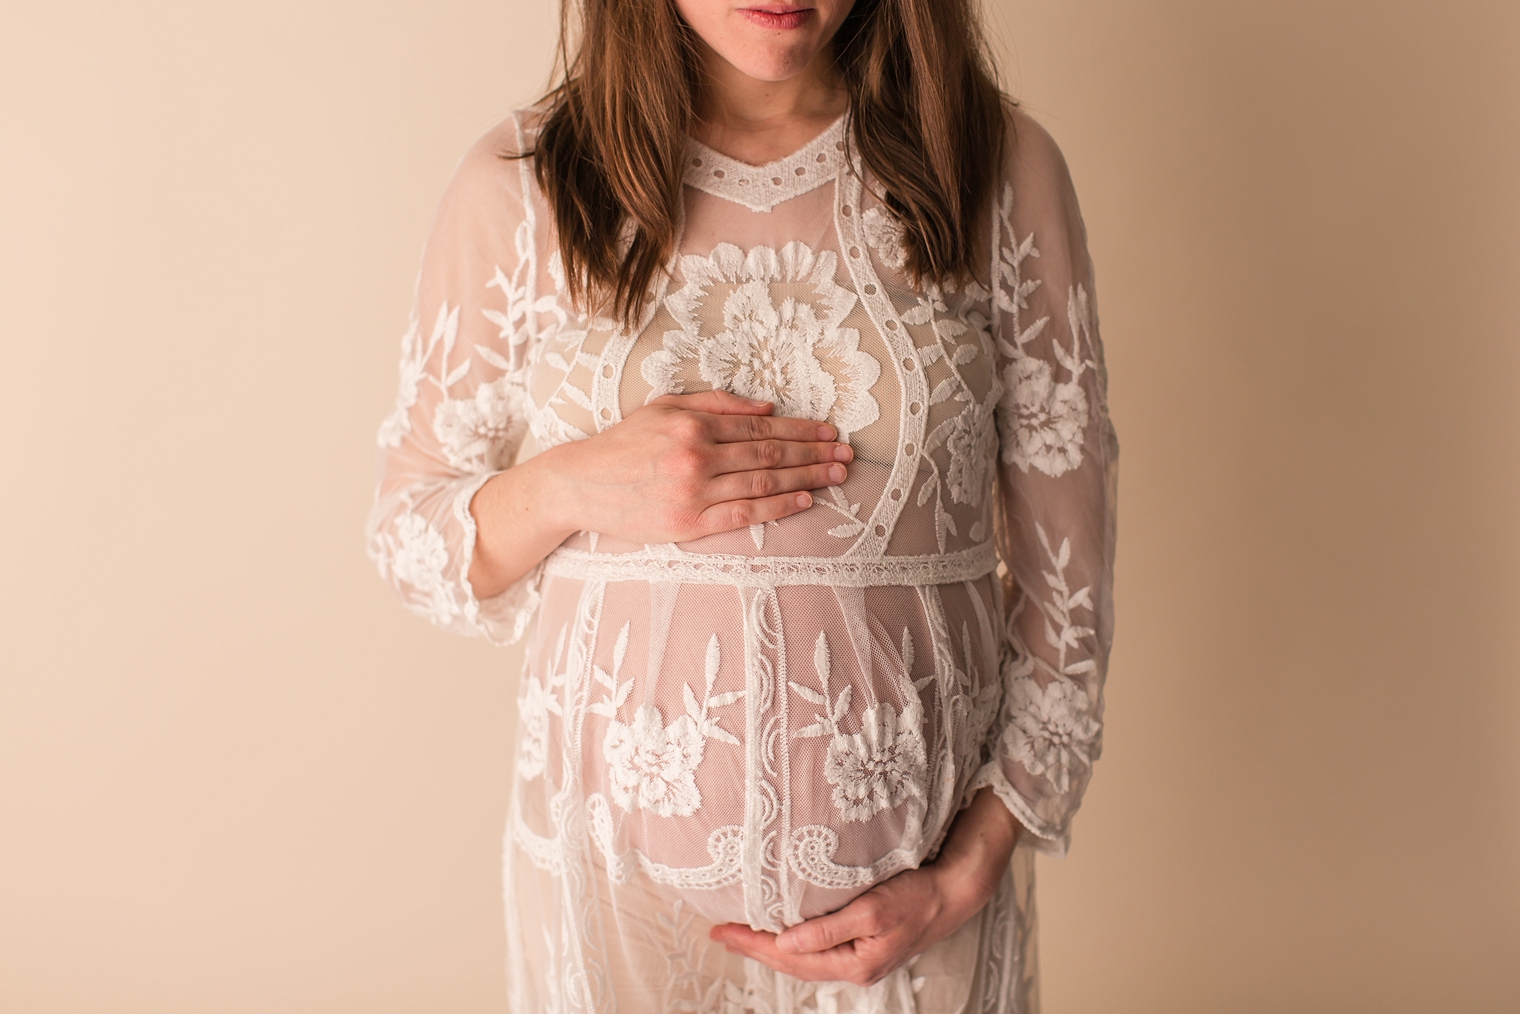 Central NJ Maternity Photographer Baby Bump Photo